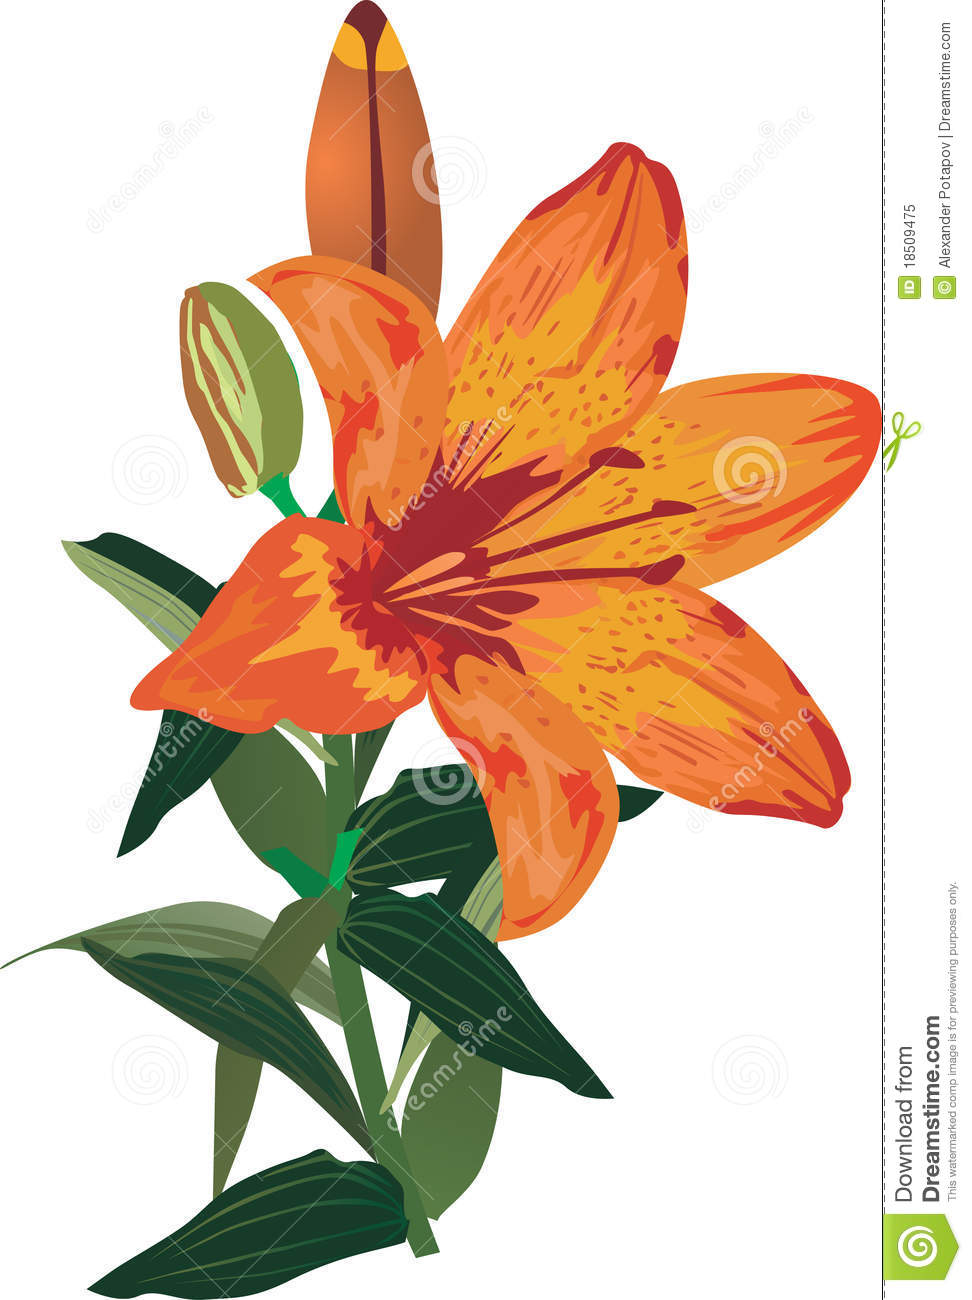 Orange lily clipart.